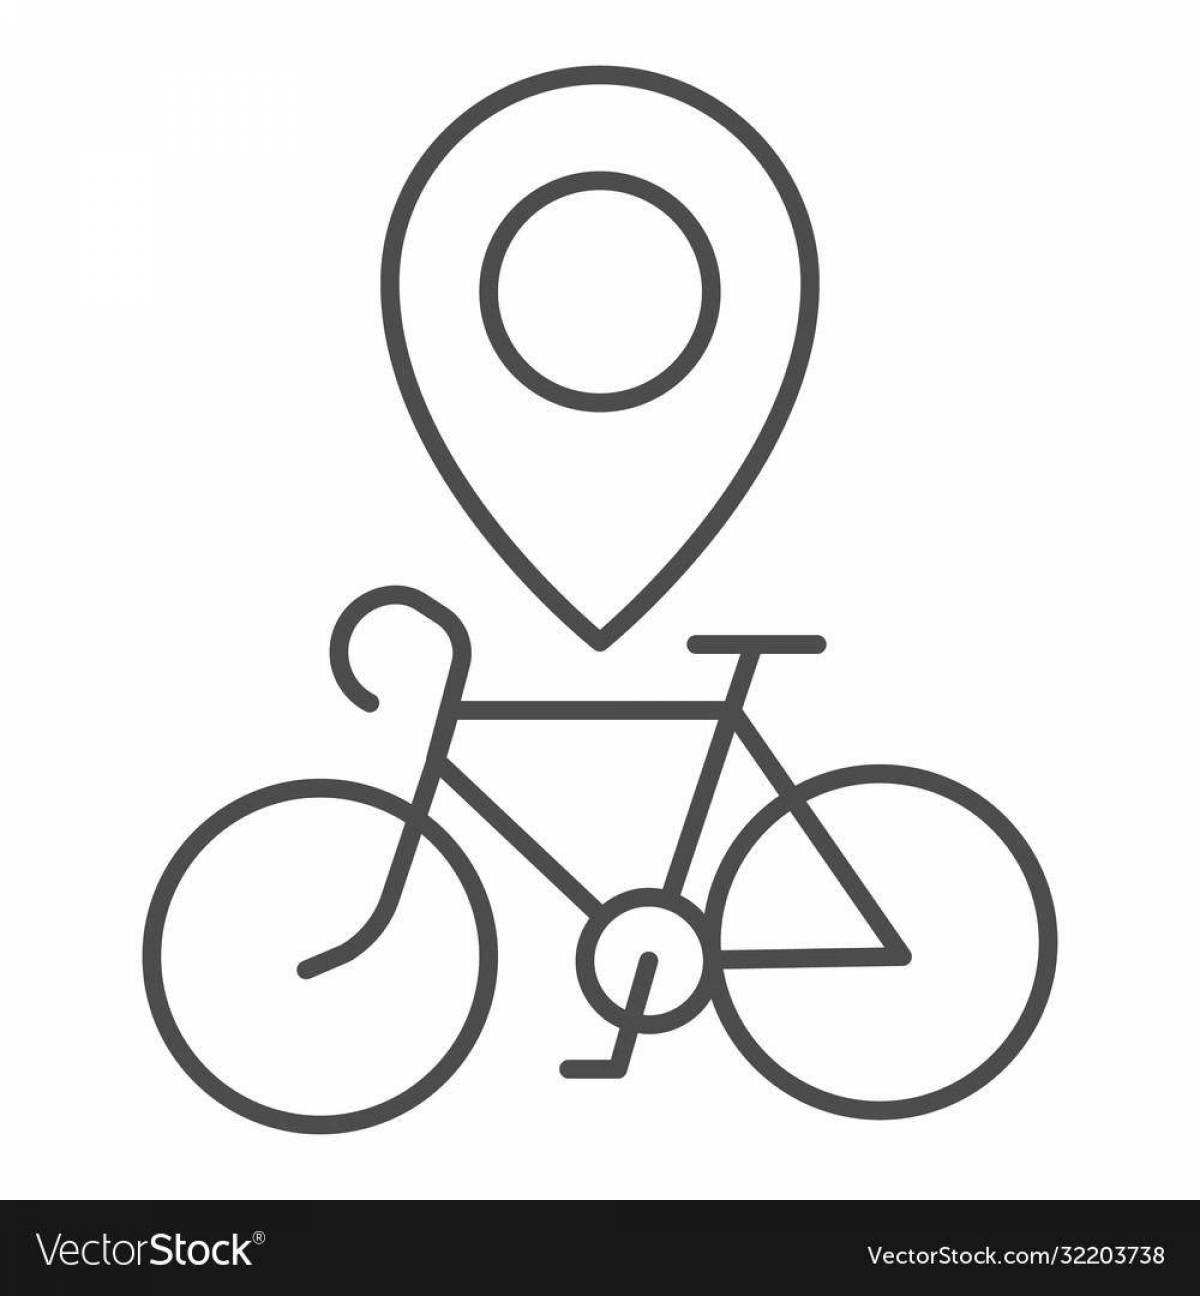 Раскраска знак запрета езды на велосипеде